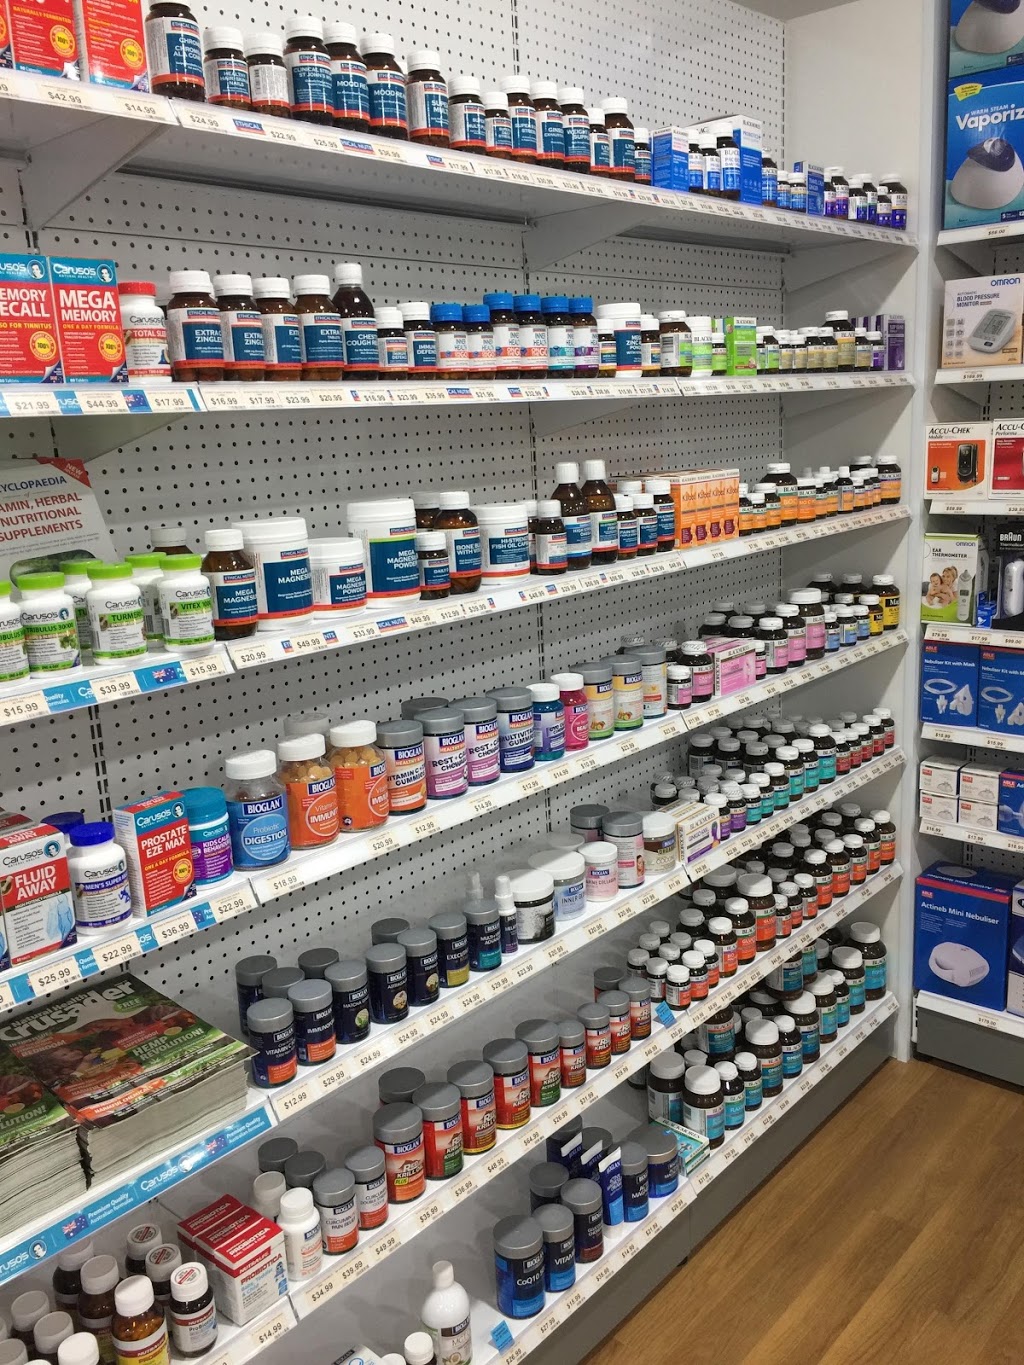 Pharmacy Focus Kellyville | Shop 7, The North Village, 4 Beaton Road, Kellyville NSW 2155, Australia | Phone: (02) 8883 4664